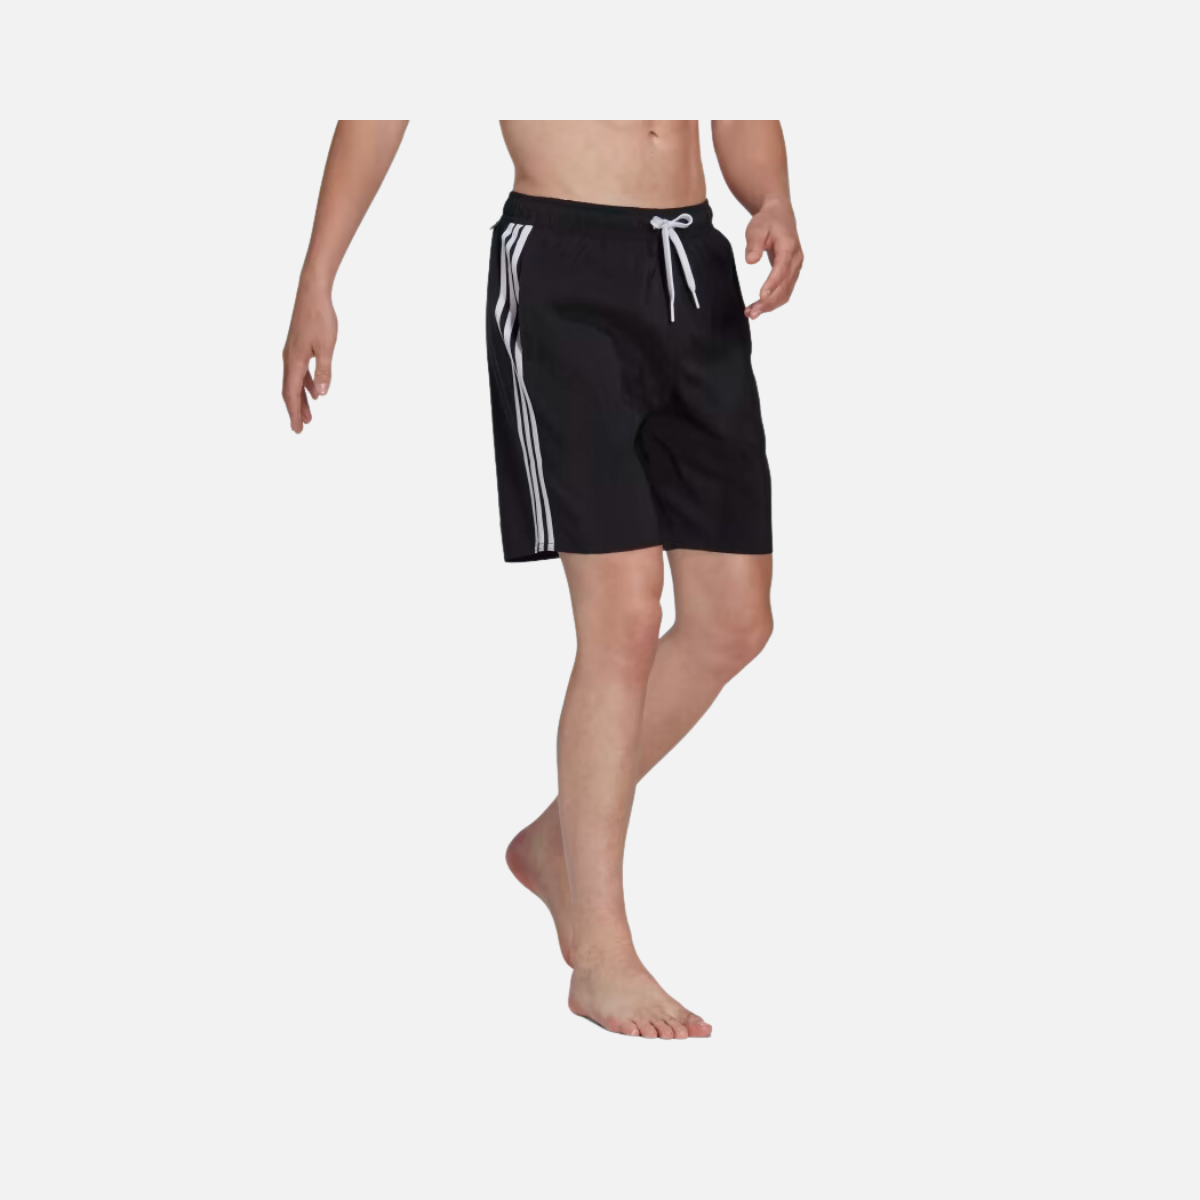 Adidas 3 Stripes CLX Men's Swim Shorts -Black/White